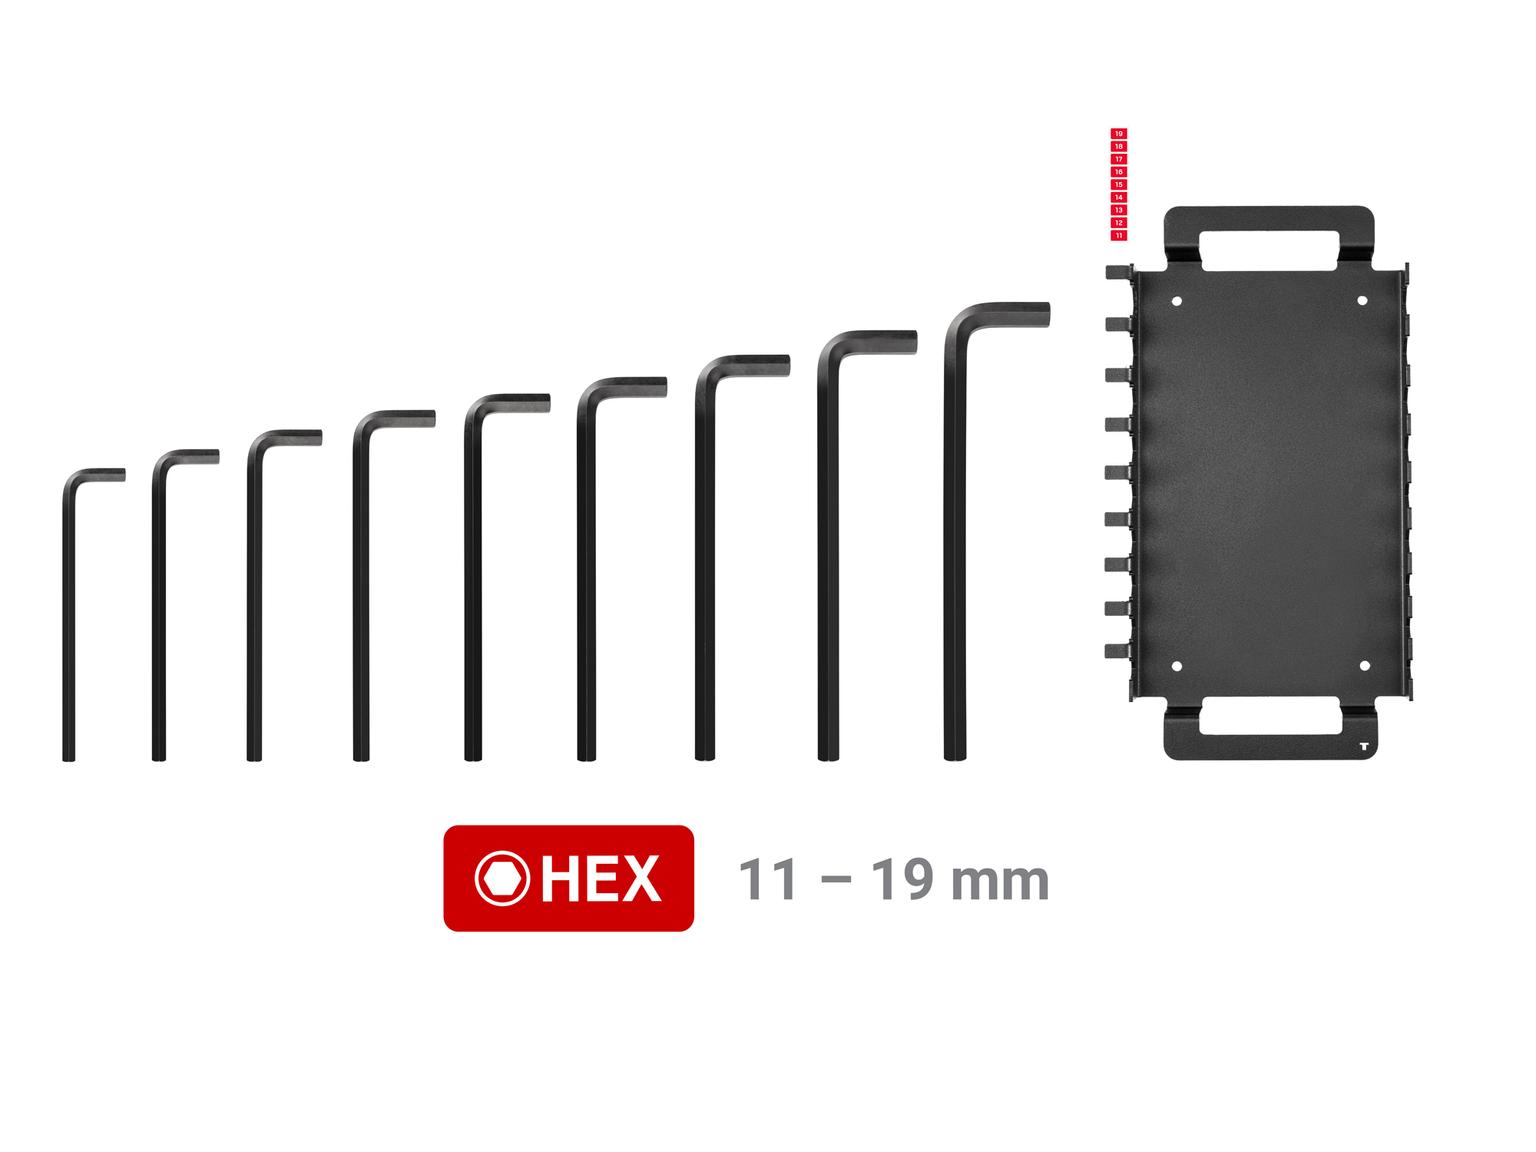 TEKTON KLX92201-T Flat End Hex L-Key Set with Rack, 9-Piece (11-19 mm)